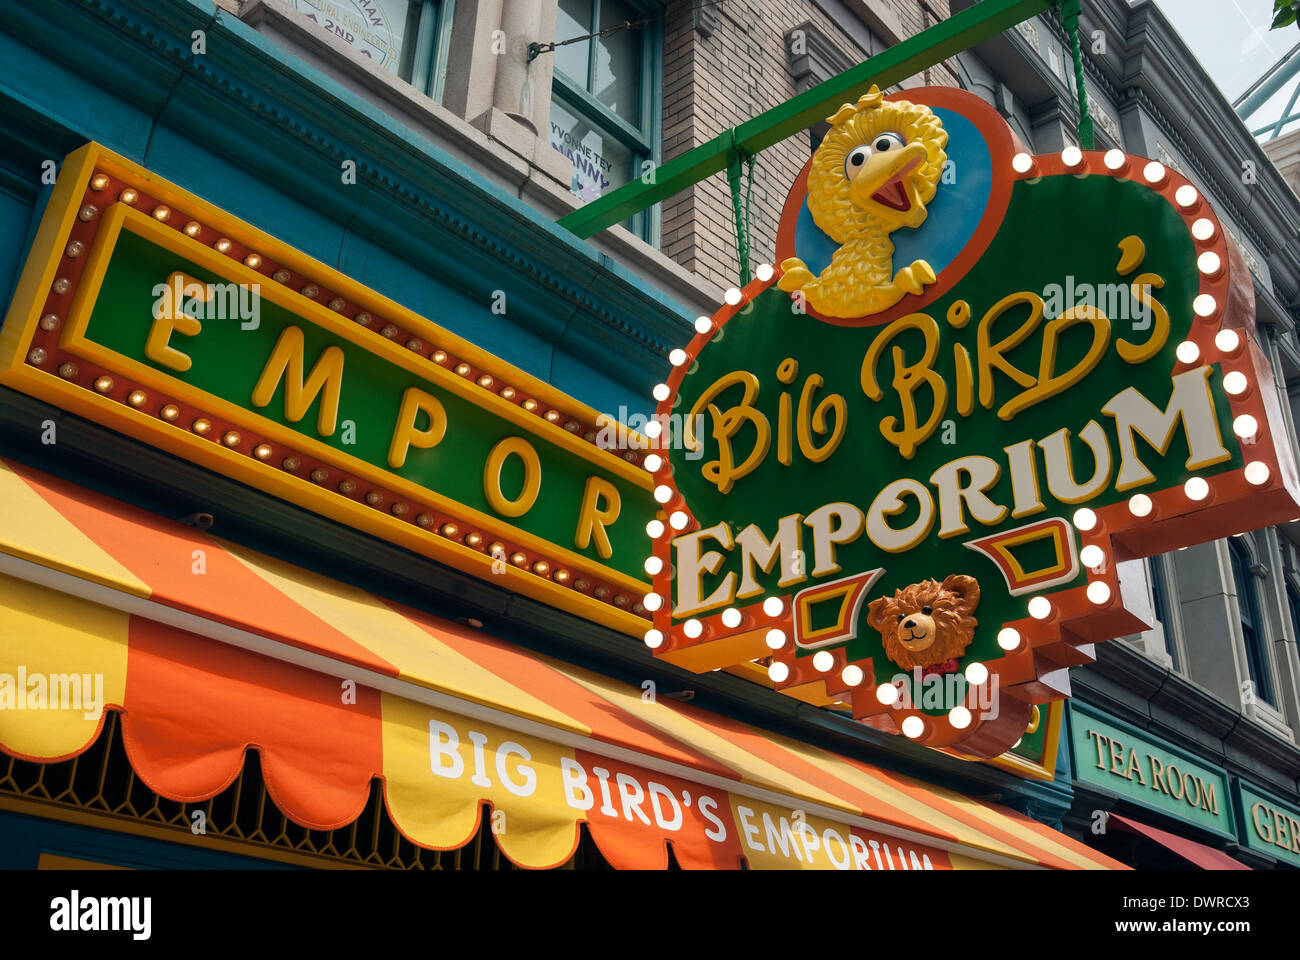 Big Bird's Emporium, Universal Studios, Singapore Stock Photo